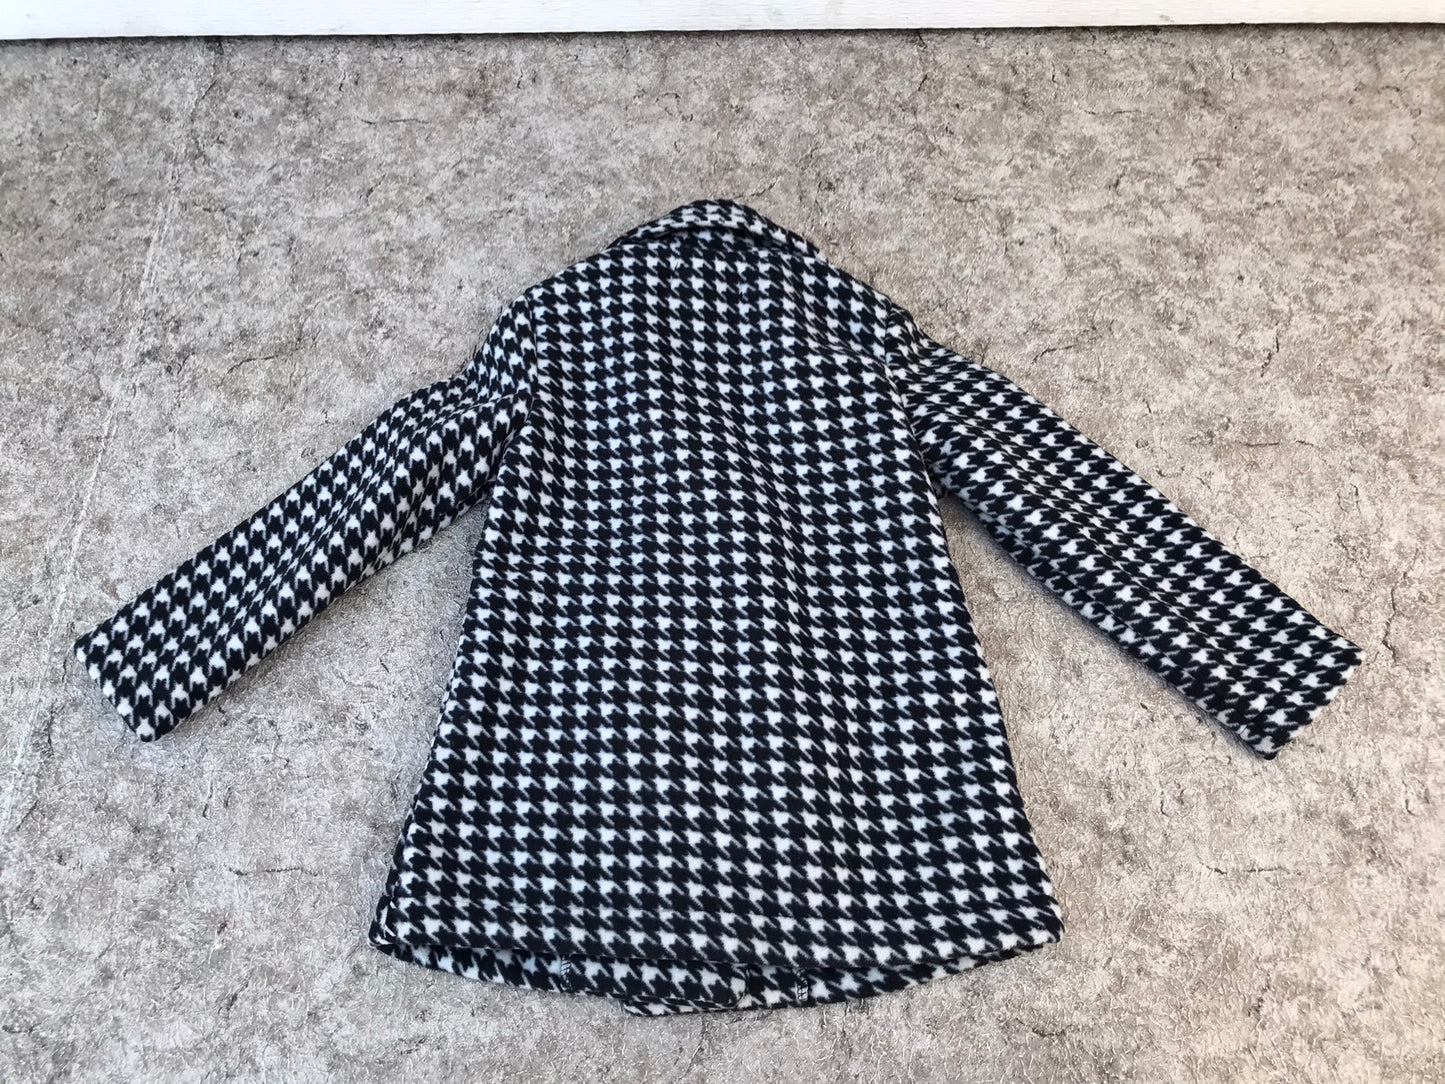 Winter Coat Child Size 4-5 Dress Coat Nicole Miller Black White New Demo Model